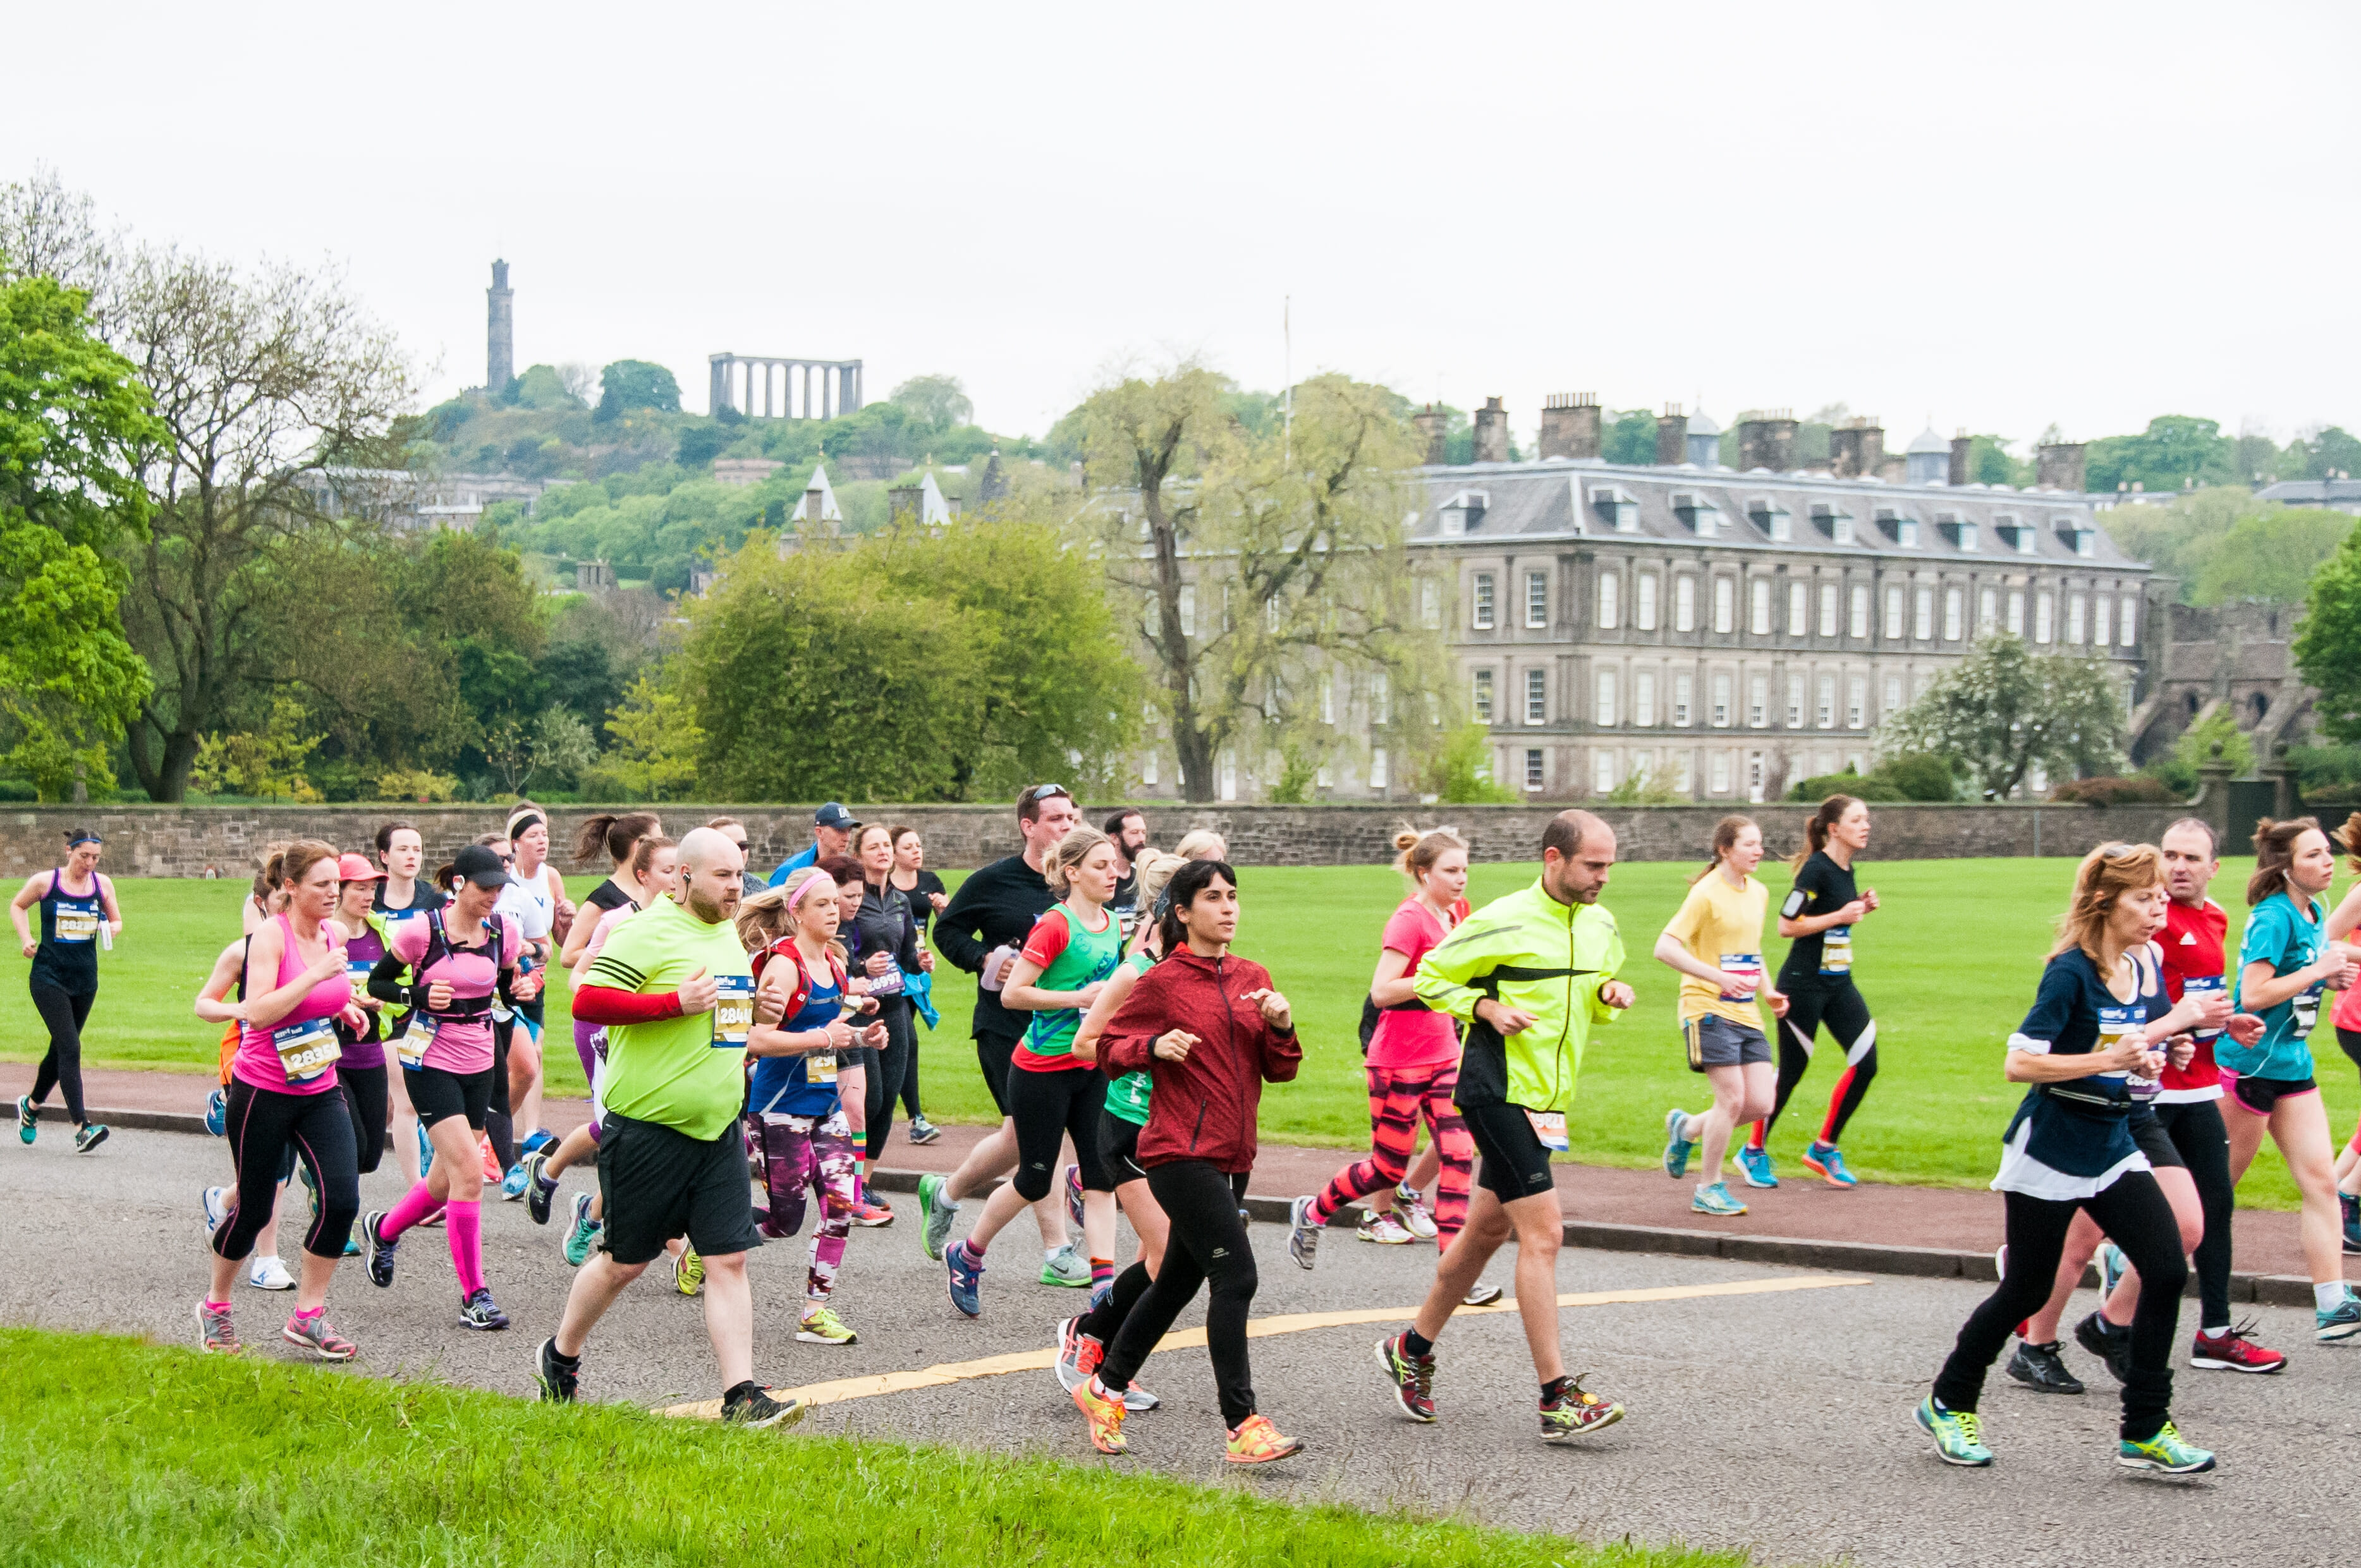 The Edinburgh Marathon explores the beautiful areas of the Scottish capital